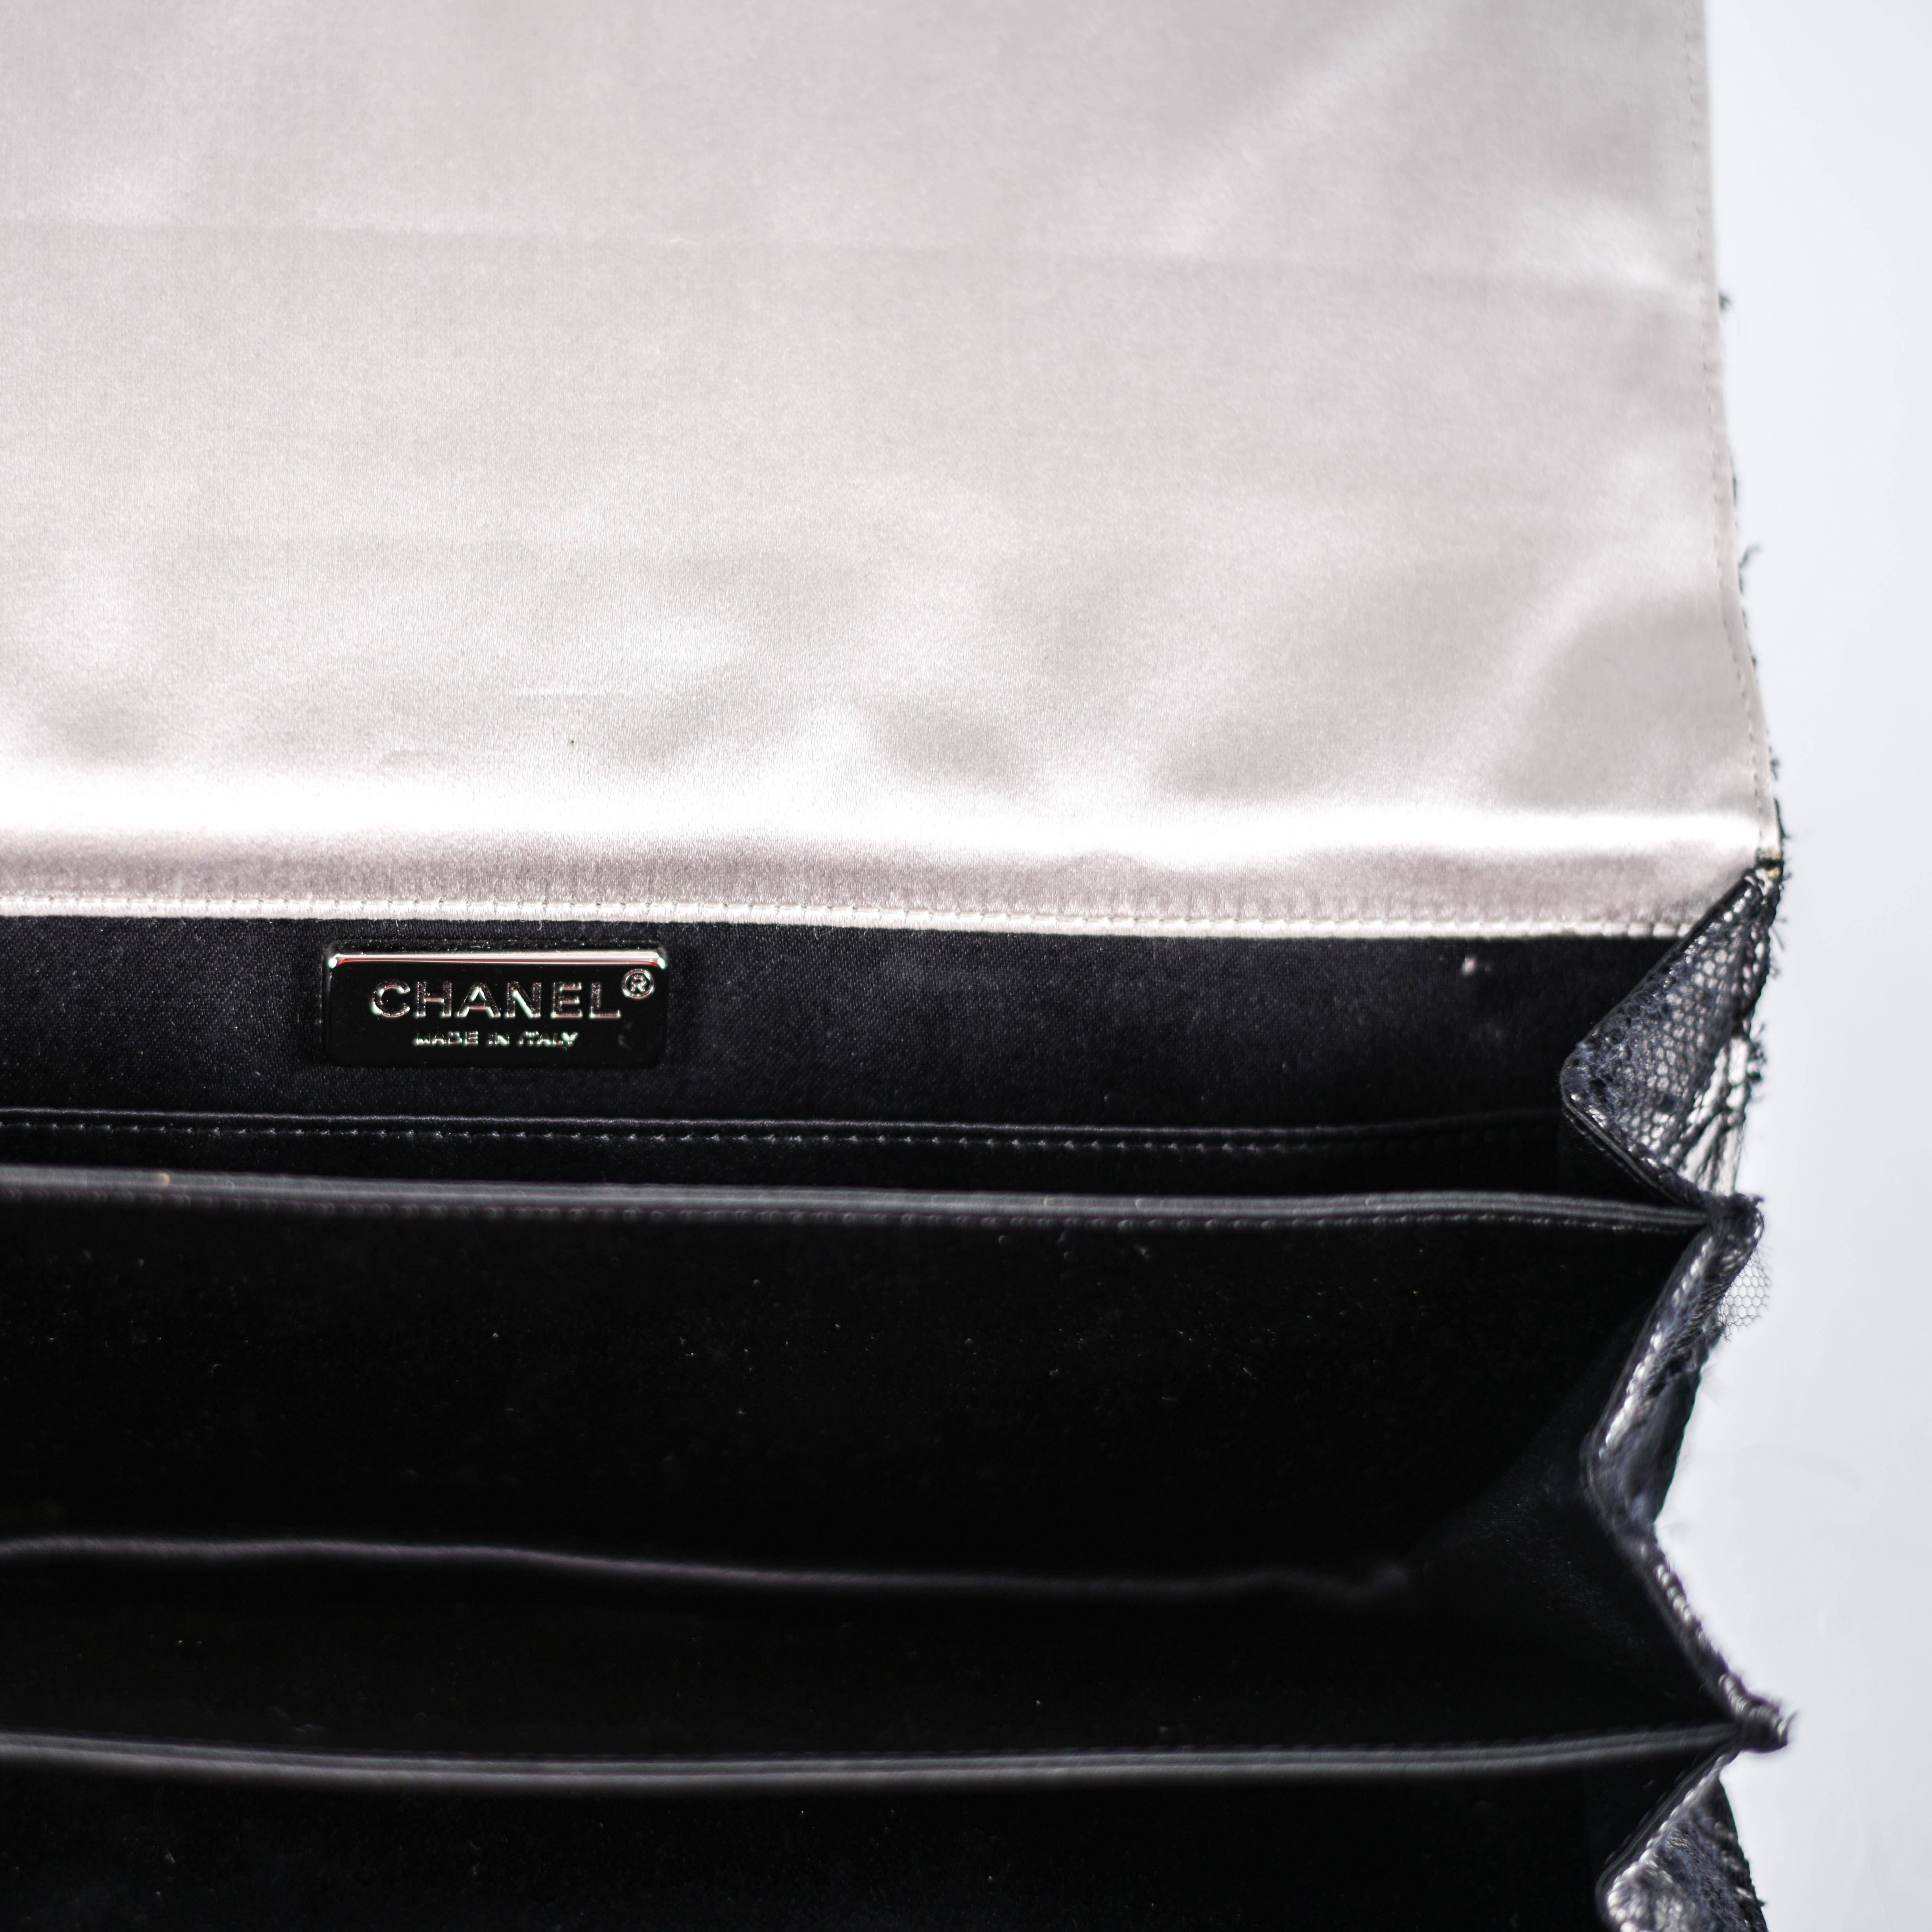 Chanel Lace Crystal Bow Clutch - 2009 Black White Satin CC Logo Silver Handbag For Sale 1